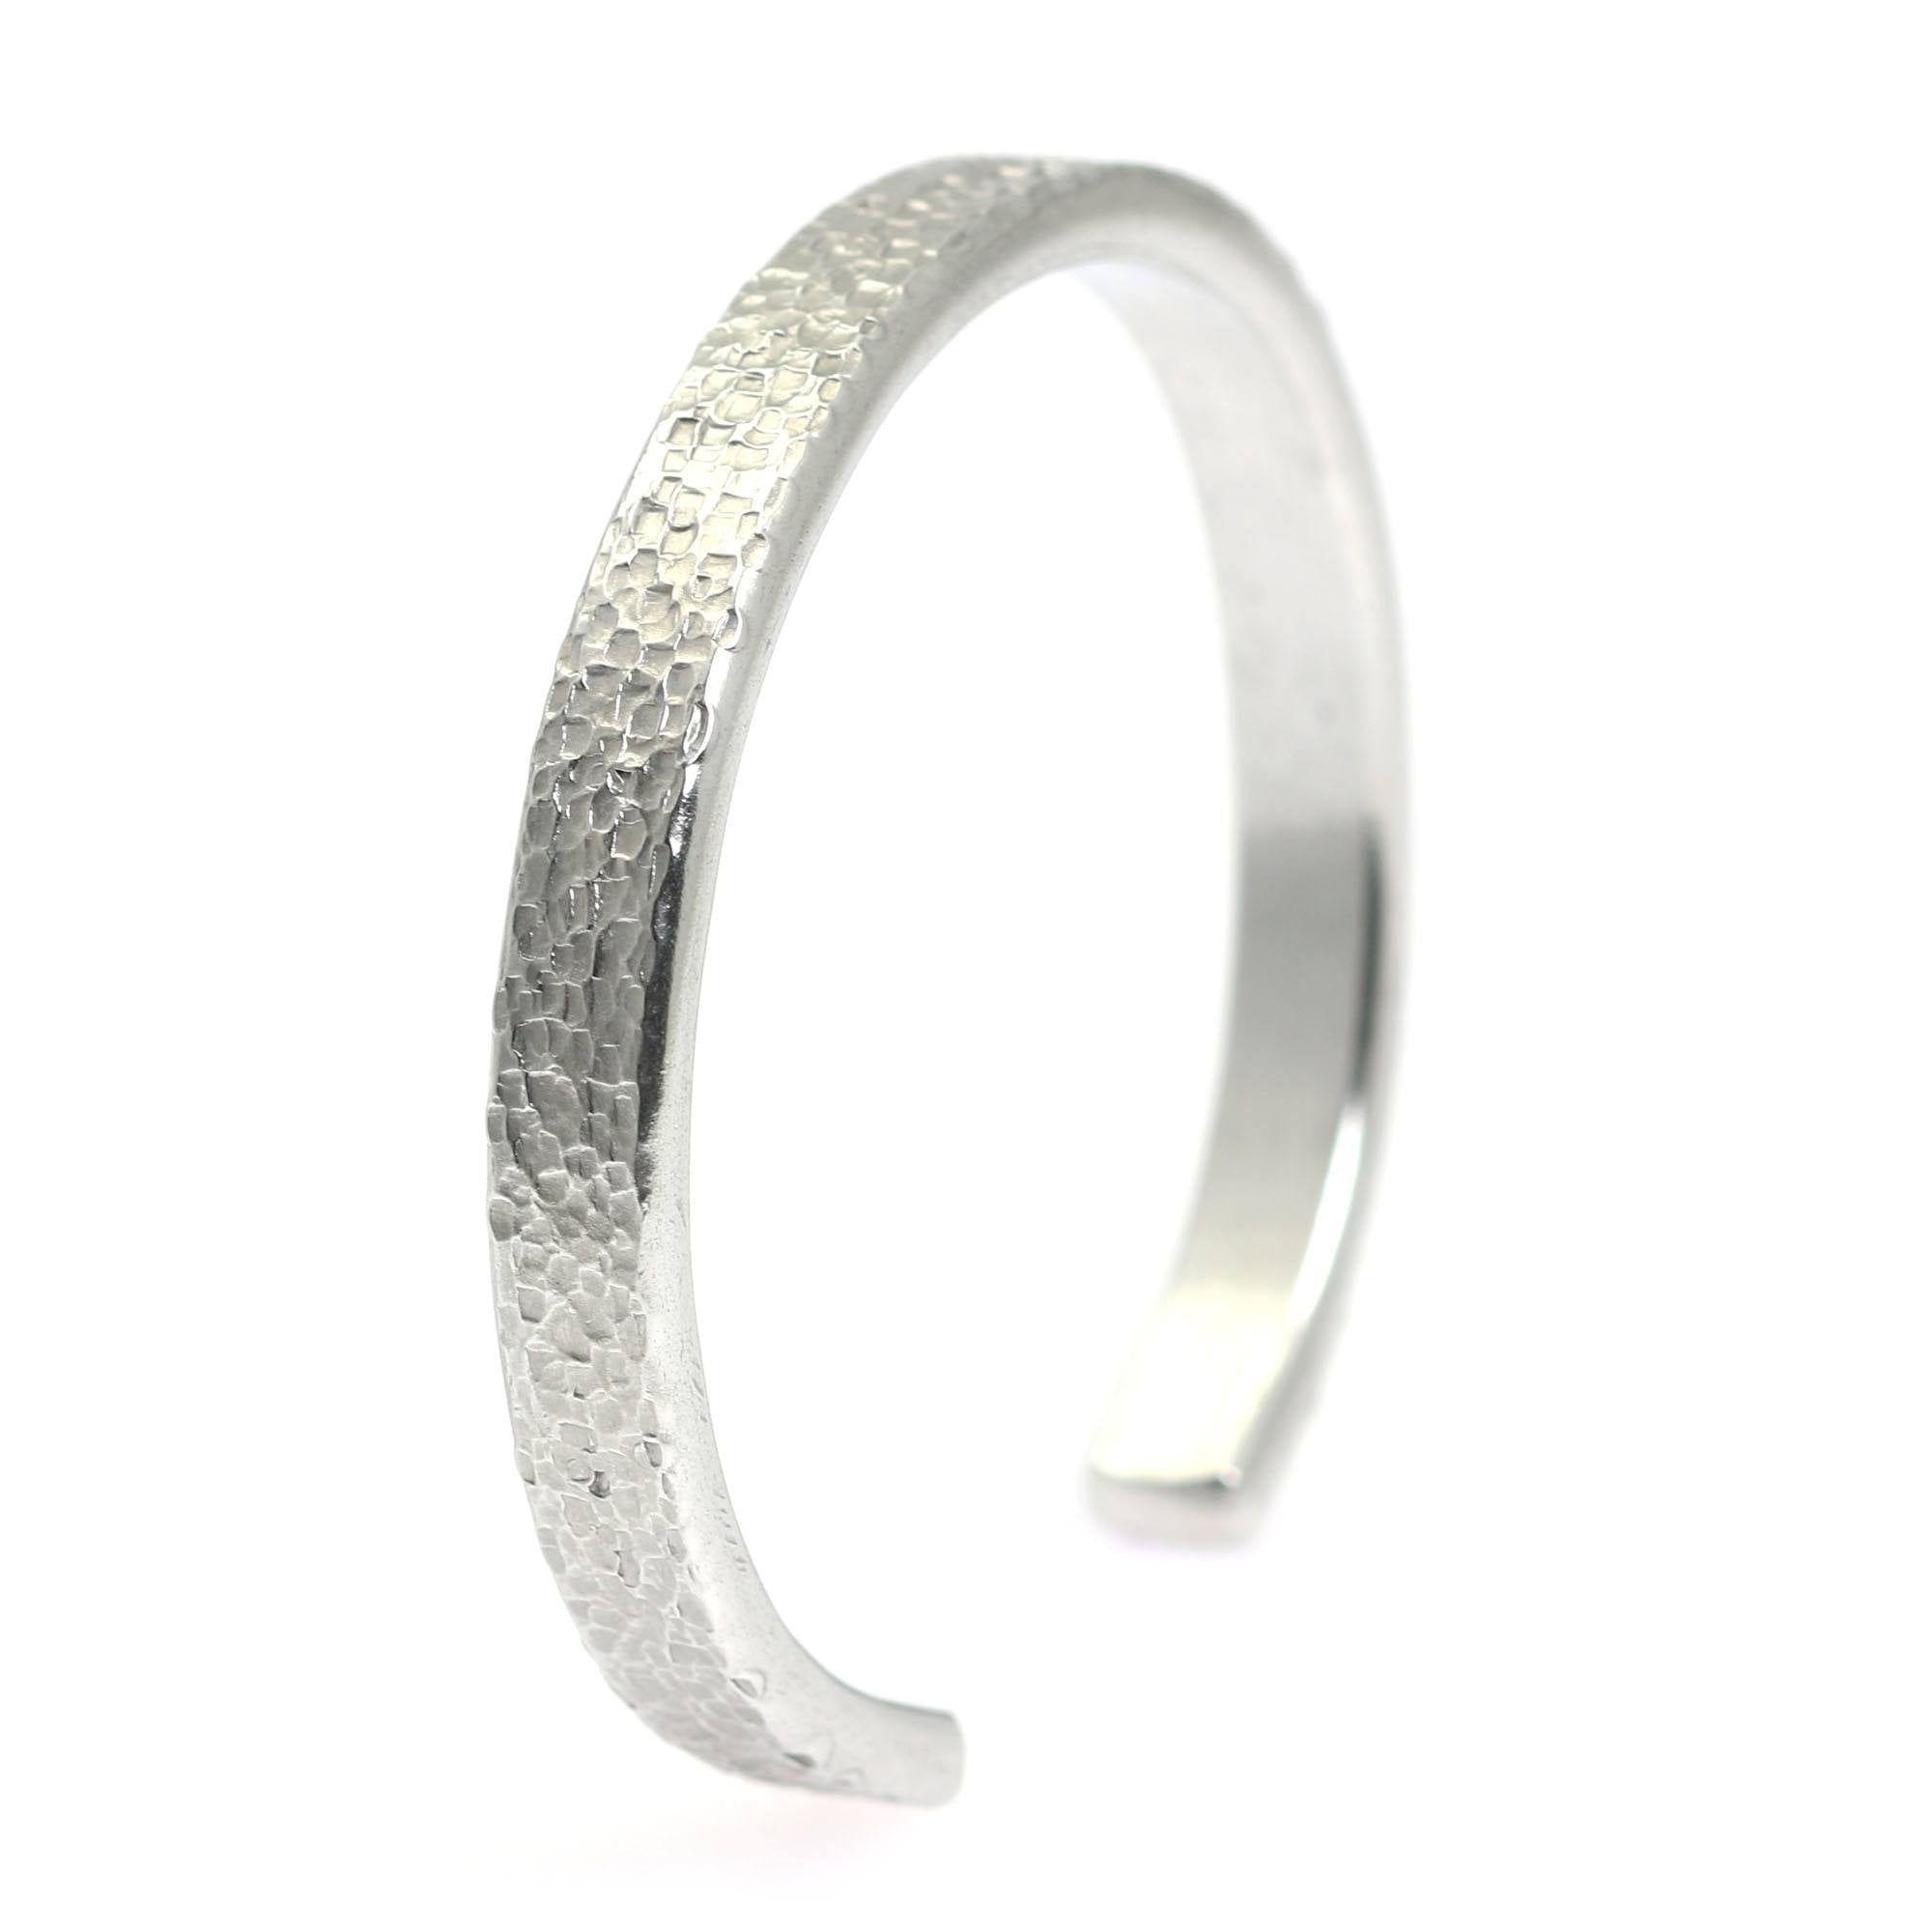 Thin Texturized Aluminum Cuff Bracelet